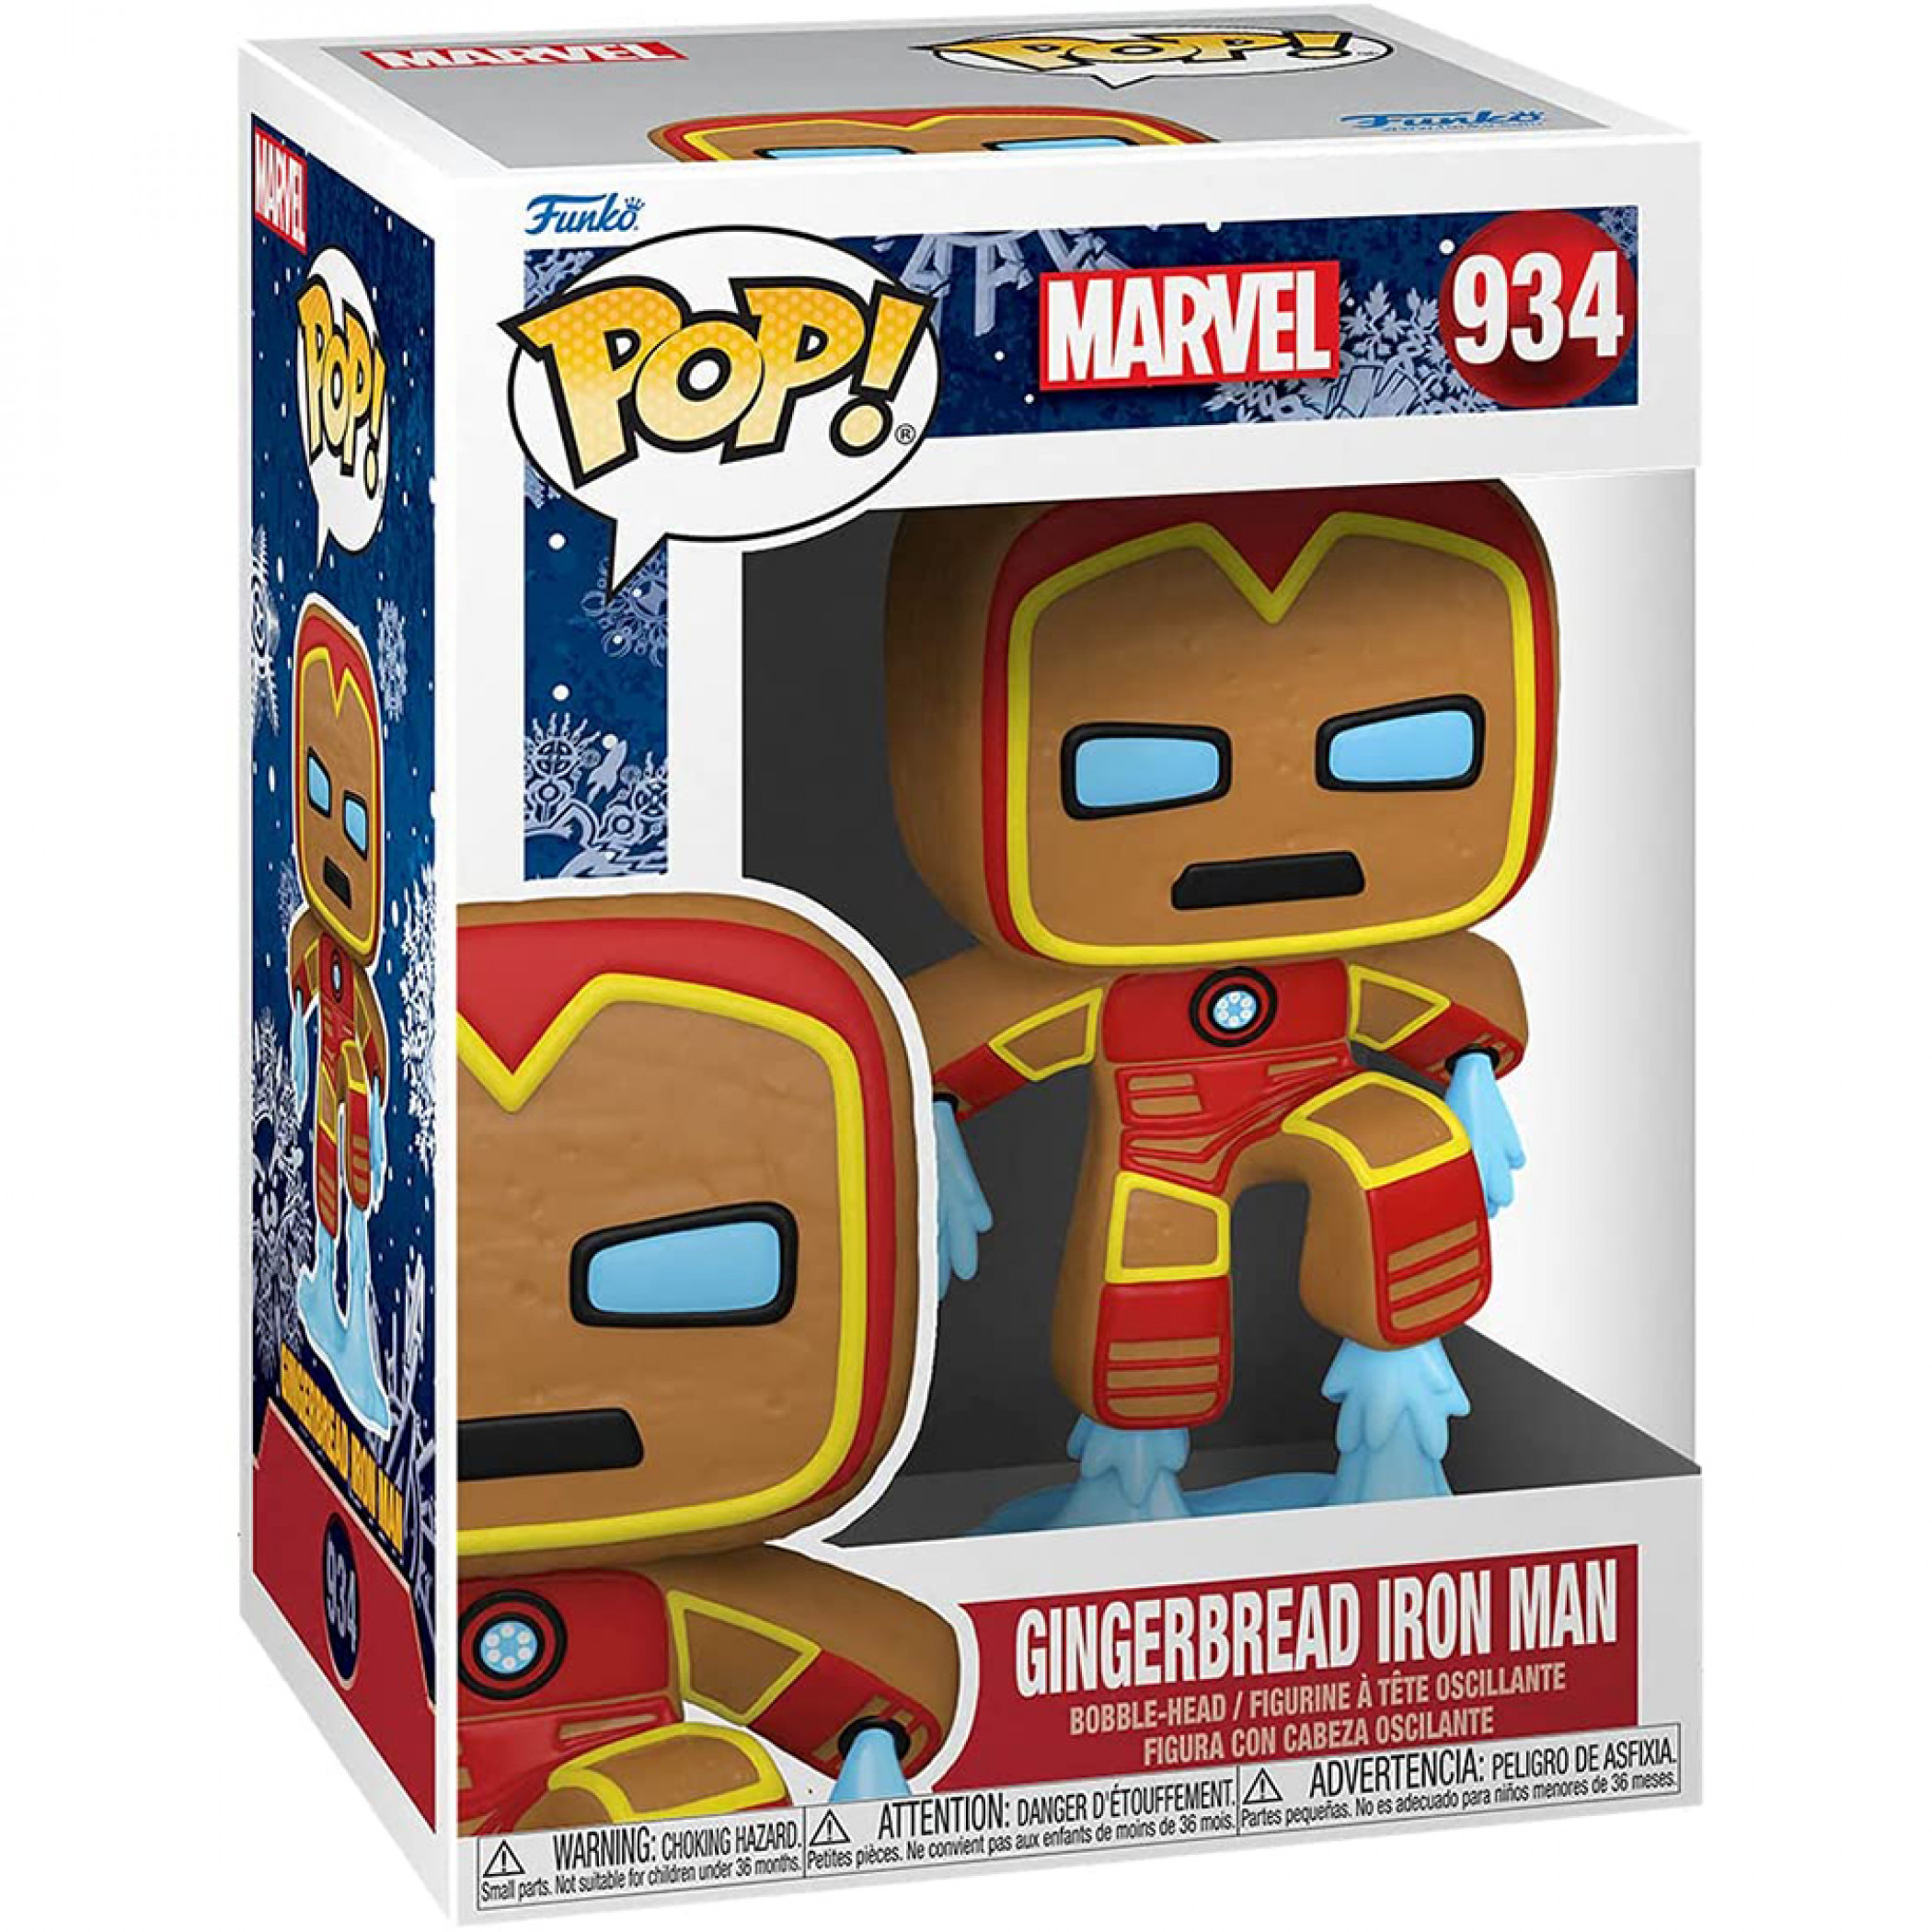 Marvel Holiday Special Iron Man Funko Pop! Vinyl Figure